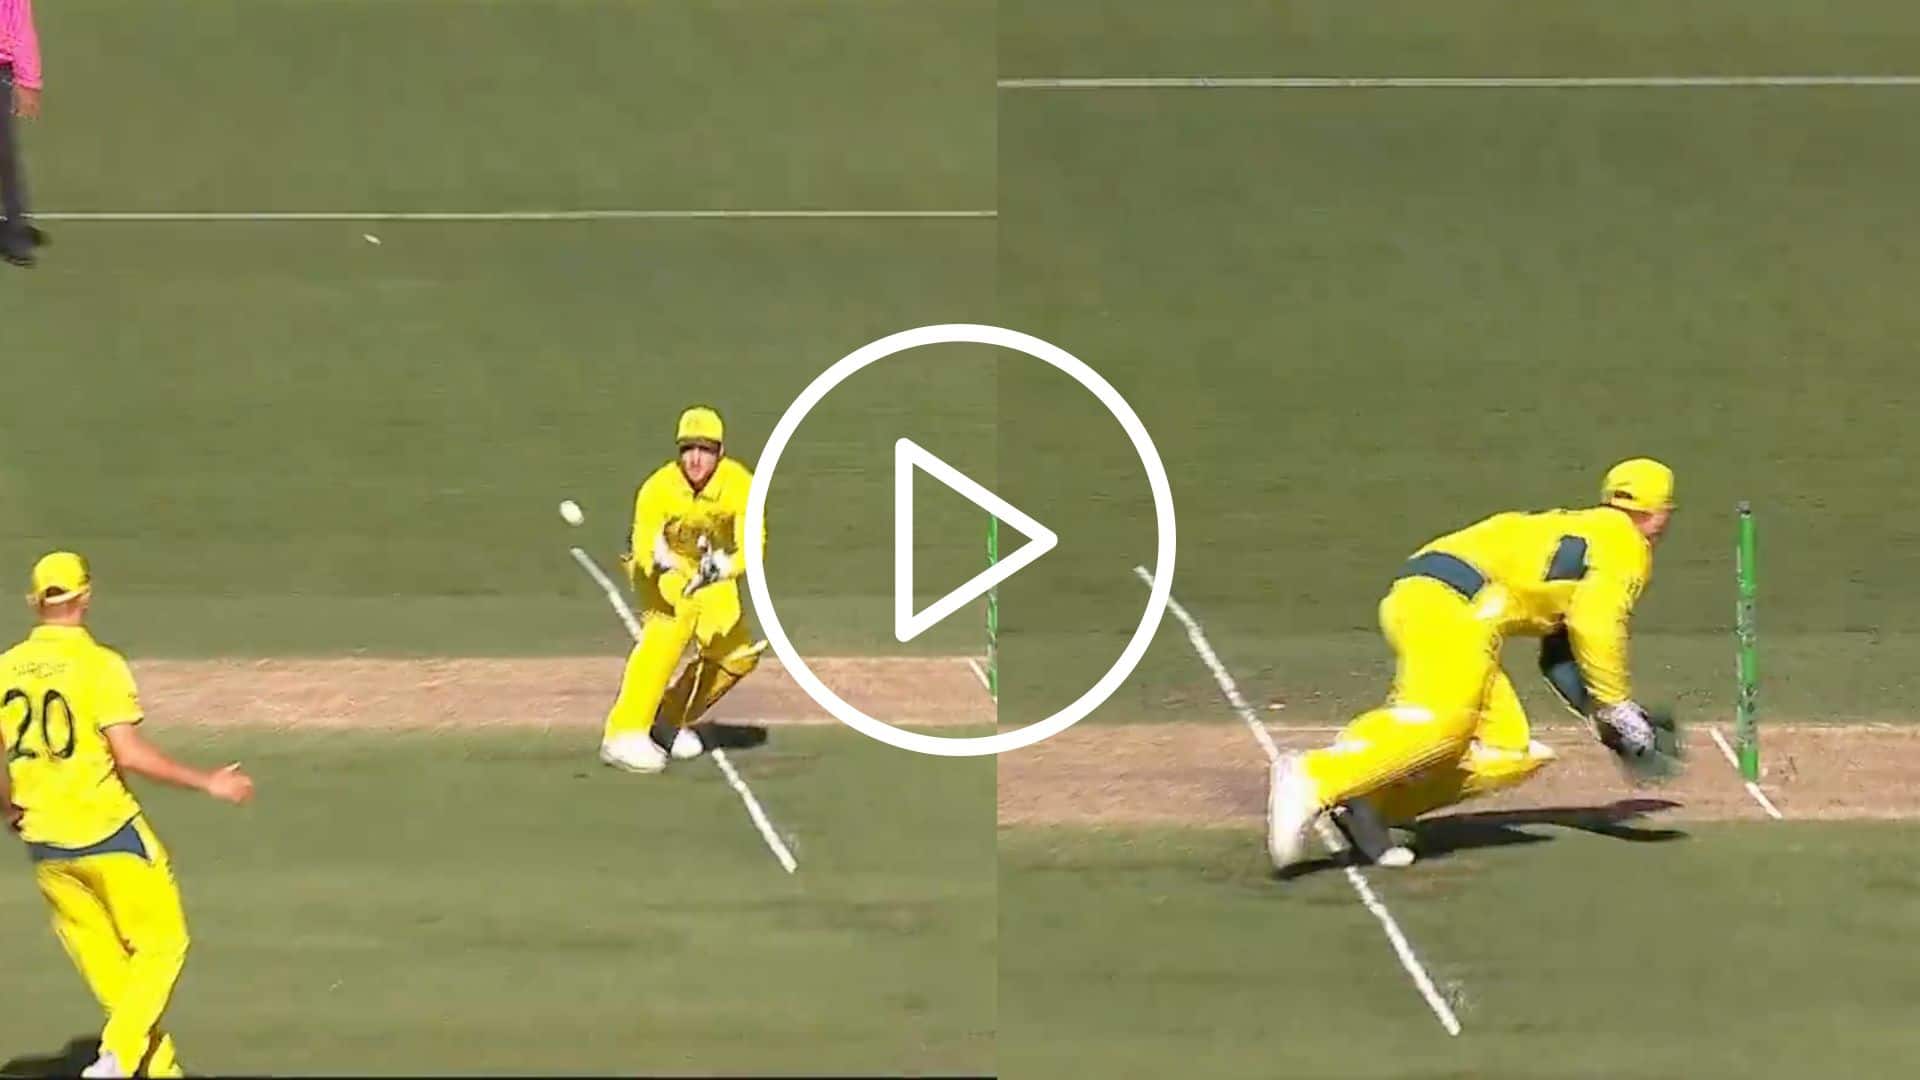 [Watch] Josh Inglis' 'Silly Blunder' vs West Indies Grabs Eyeballs During AUS vs WI 1st ODI